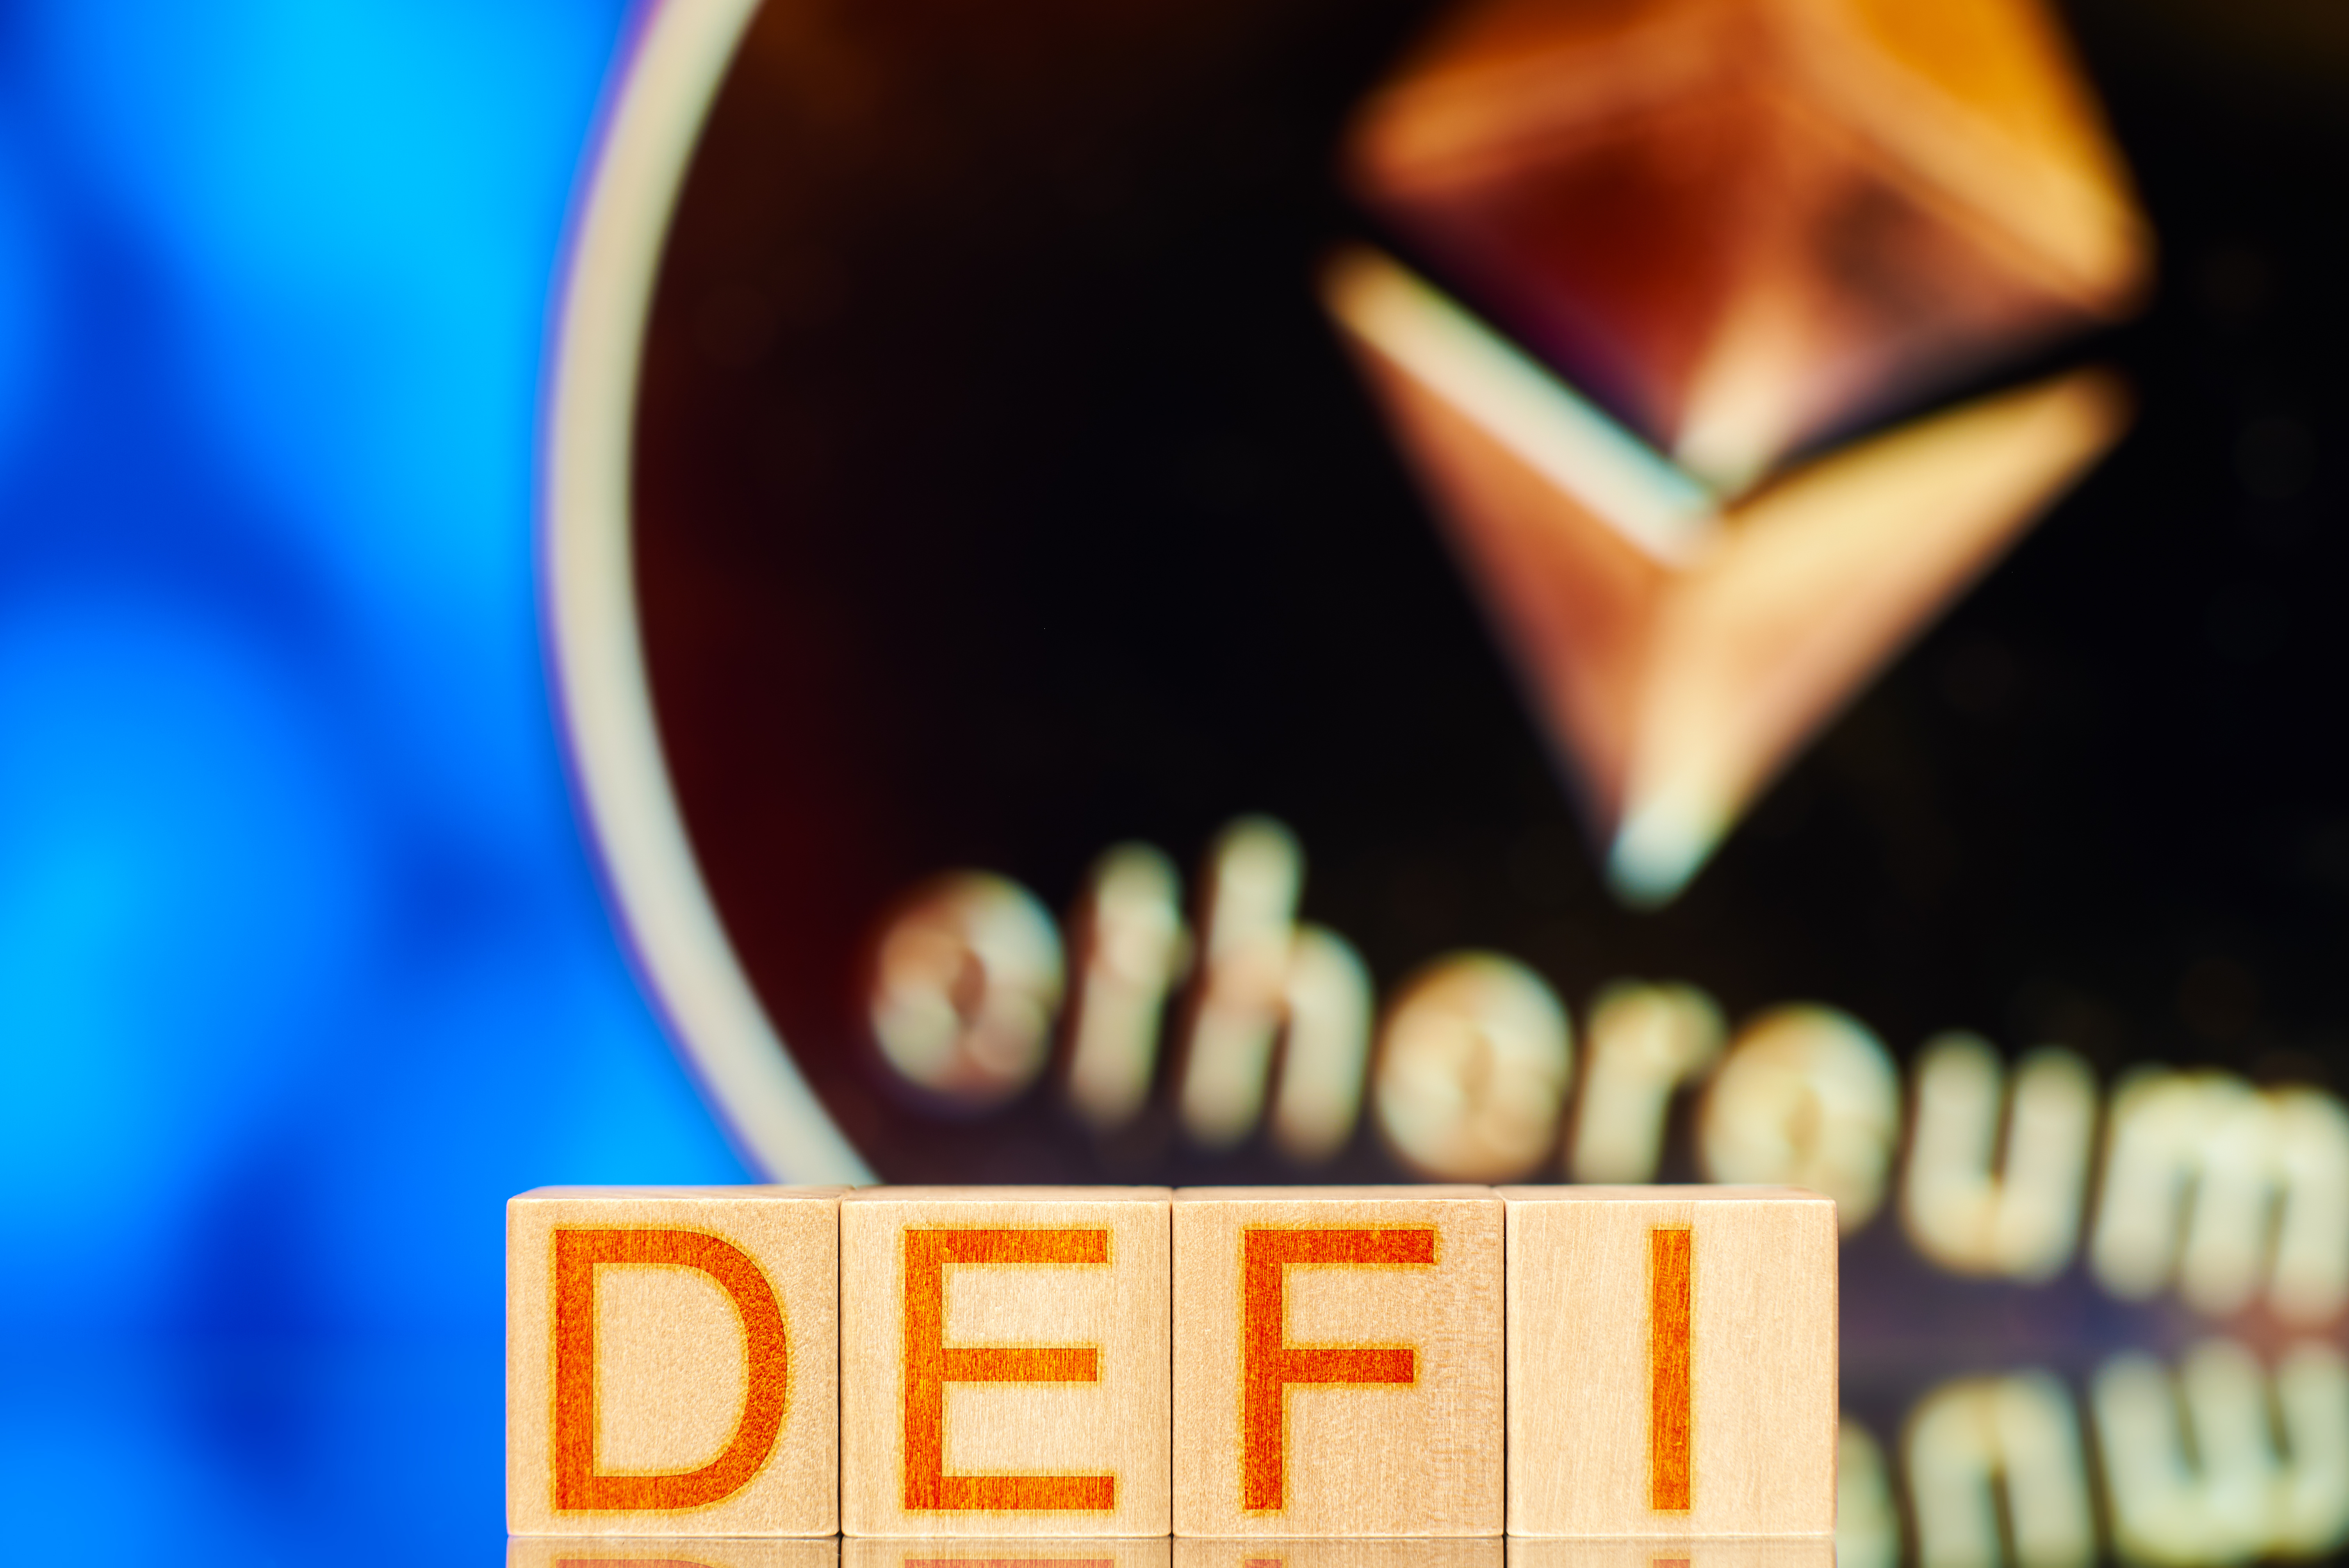 DeFi Winning ‘Bullish’ Fans, But Ethereum’s ‘Crown’ In Danger – Report